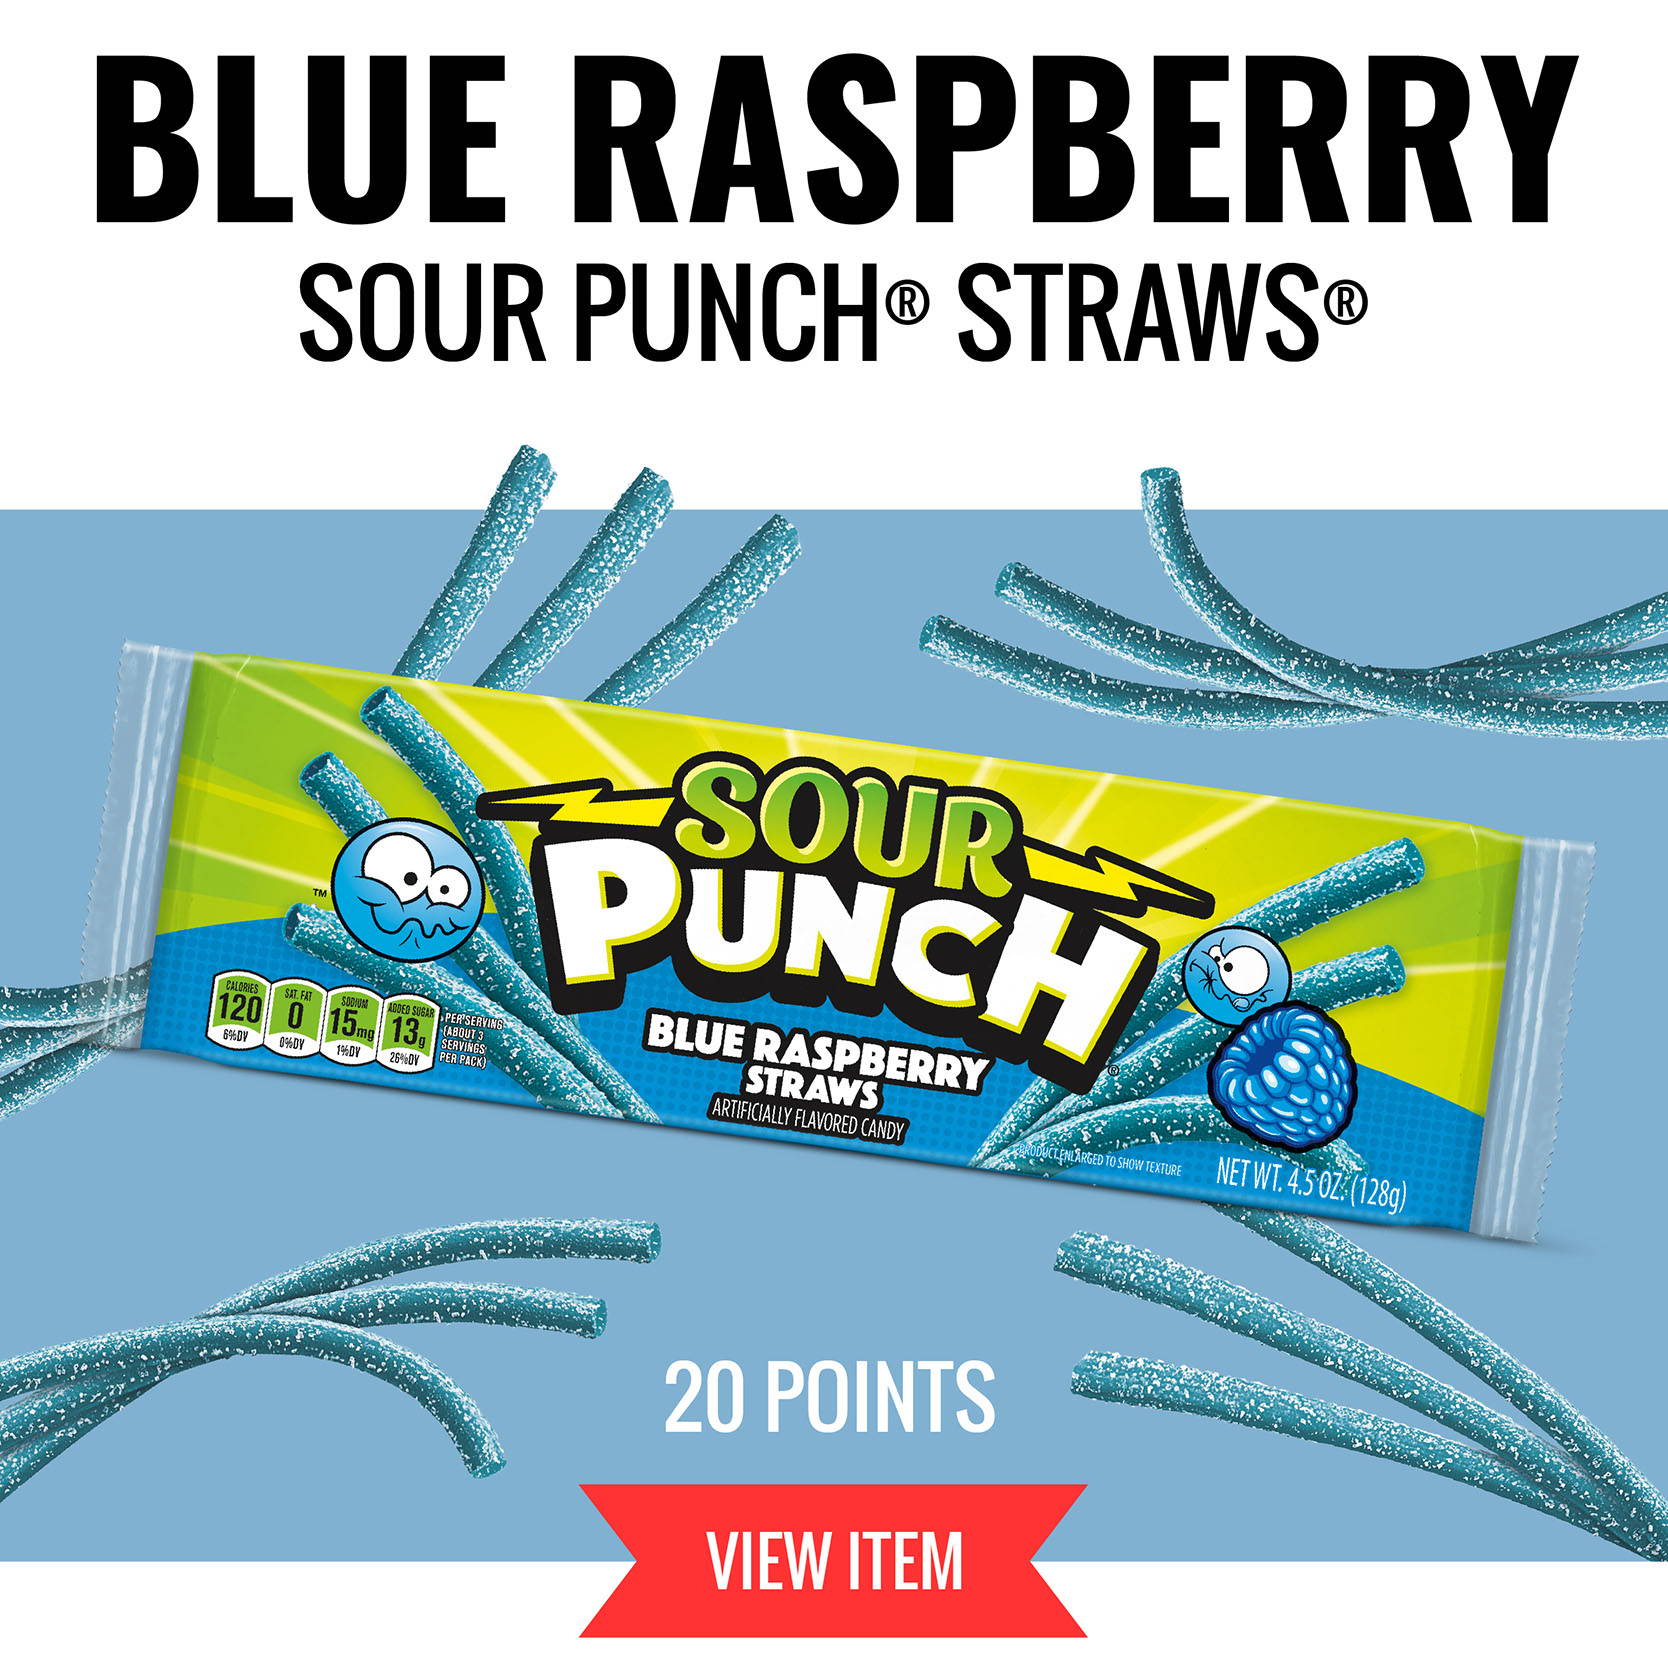 Blue Raspberry Sour Punch Straws, 4.5oz - 20 Points - VIEW ITEM